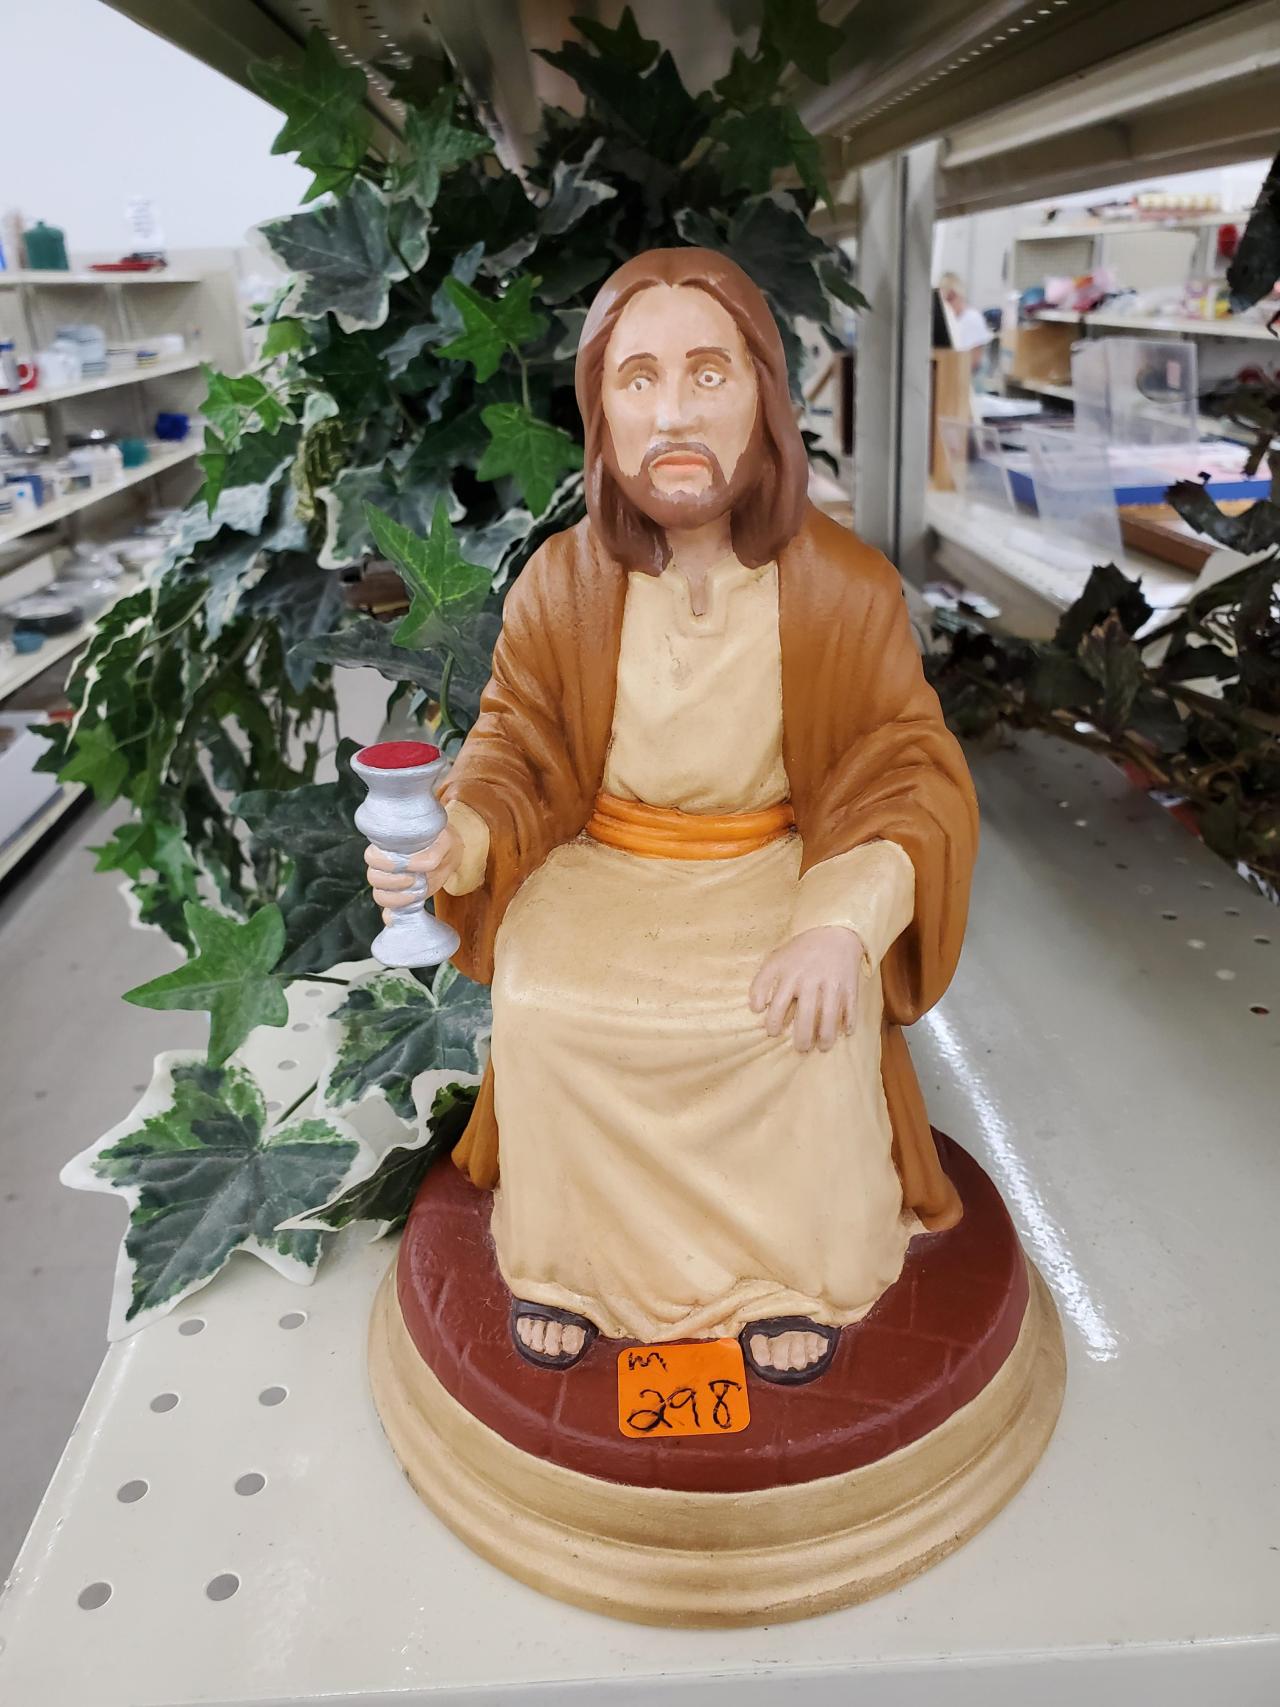 PsBattle: This Jesus statue #LOL#funny#photoshop#photos